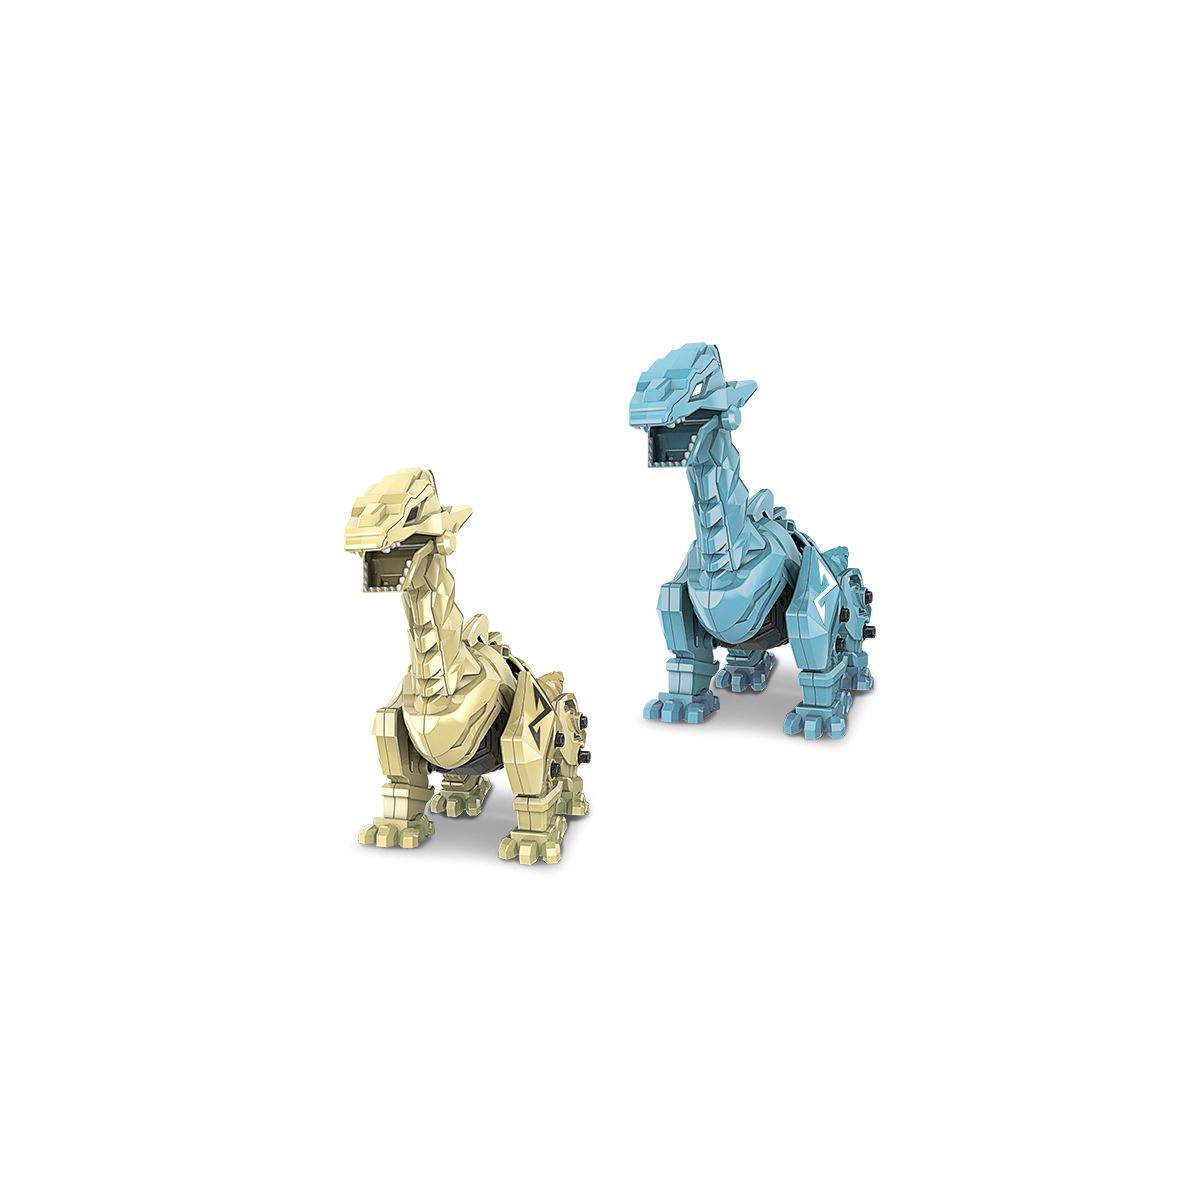 Figurka Artyk robo dinozaur do składania (132391)